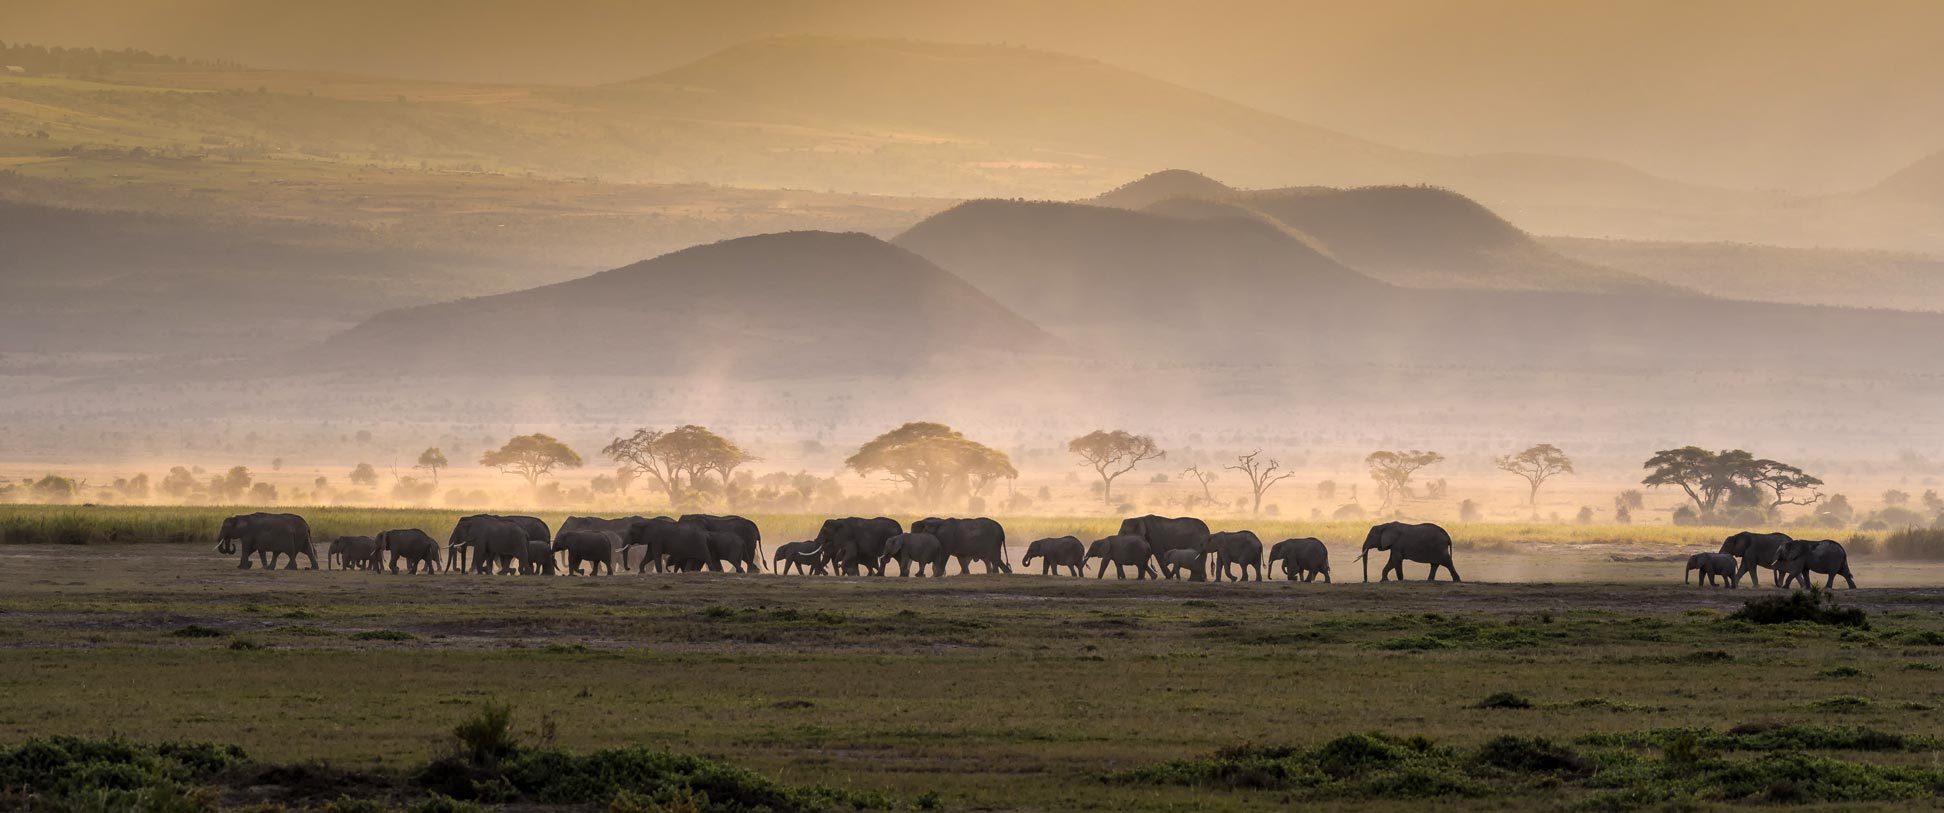 A herd of elephants at sunset in Amboseli National Park, Kenya